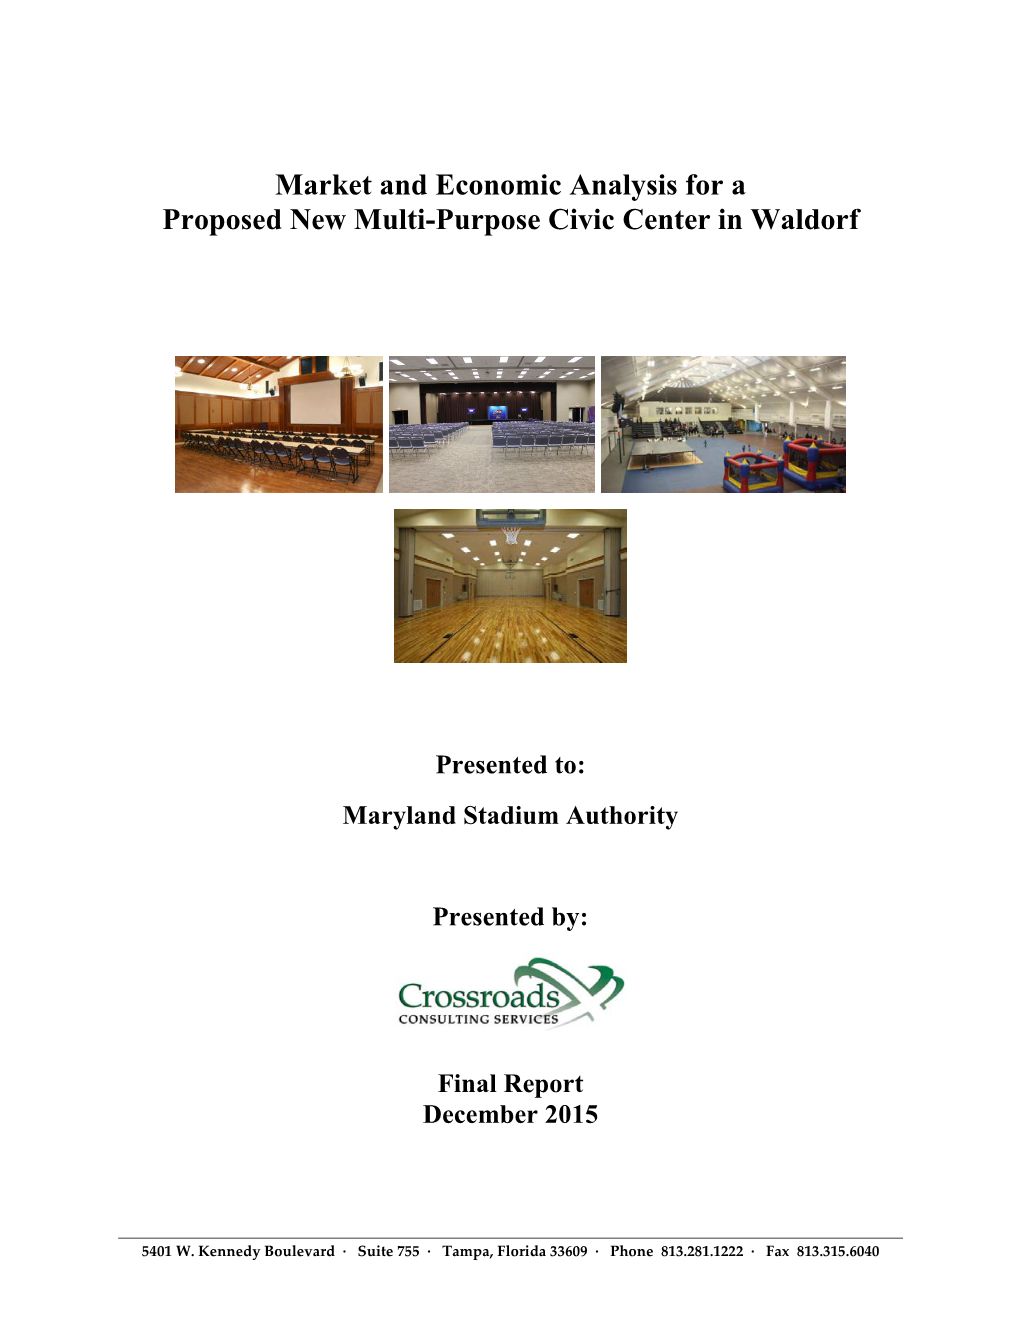 Waldorf Multi-Purpose Civic Center Analysis